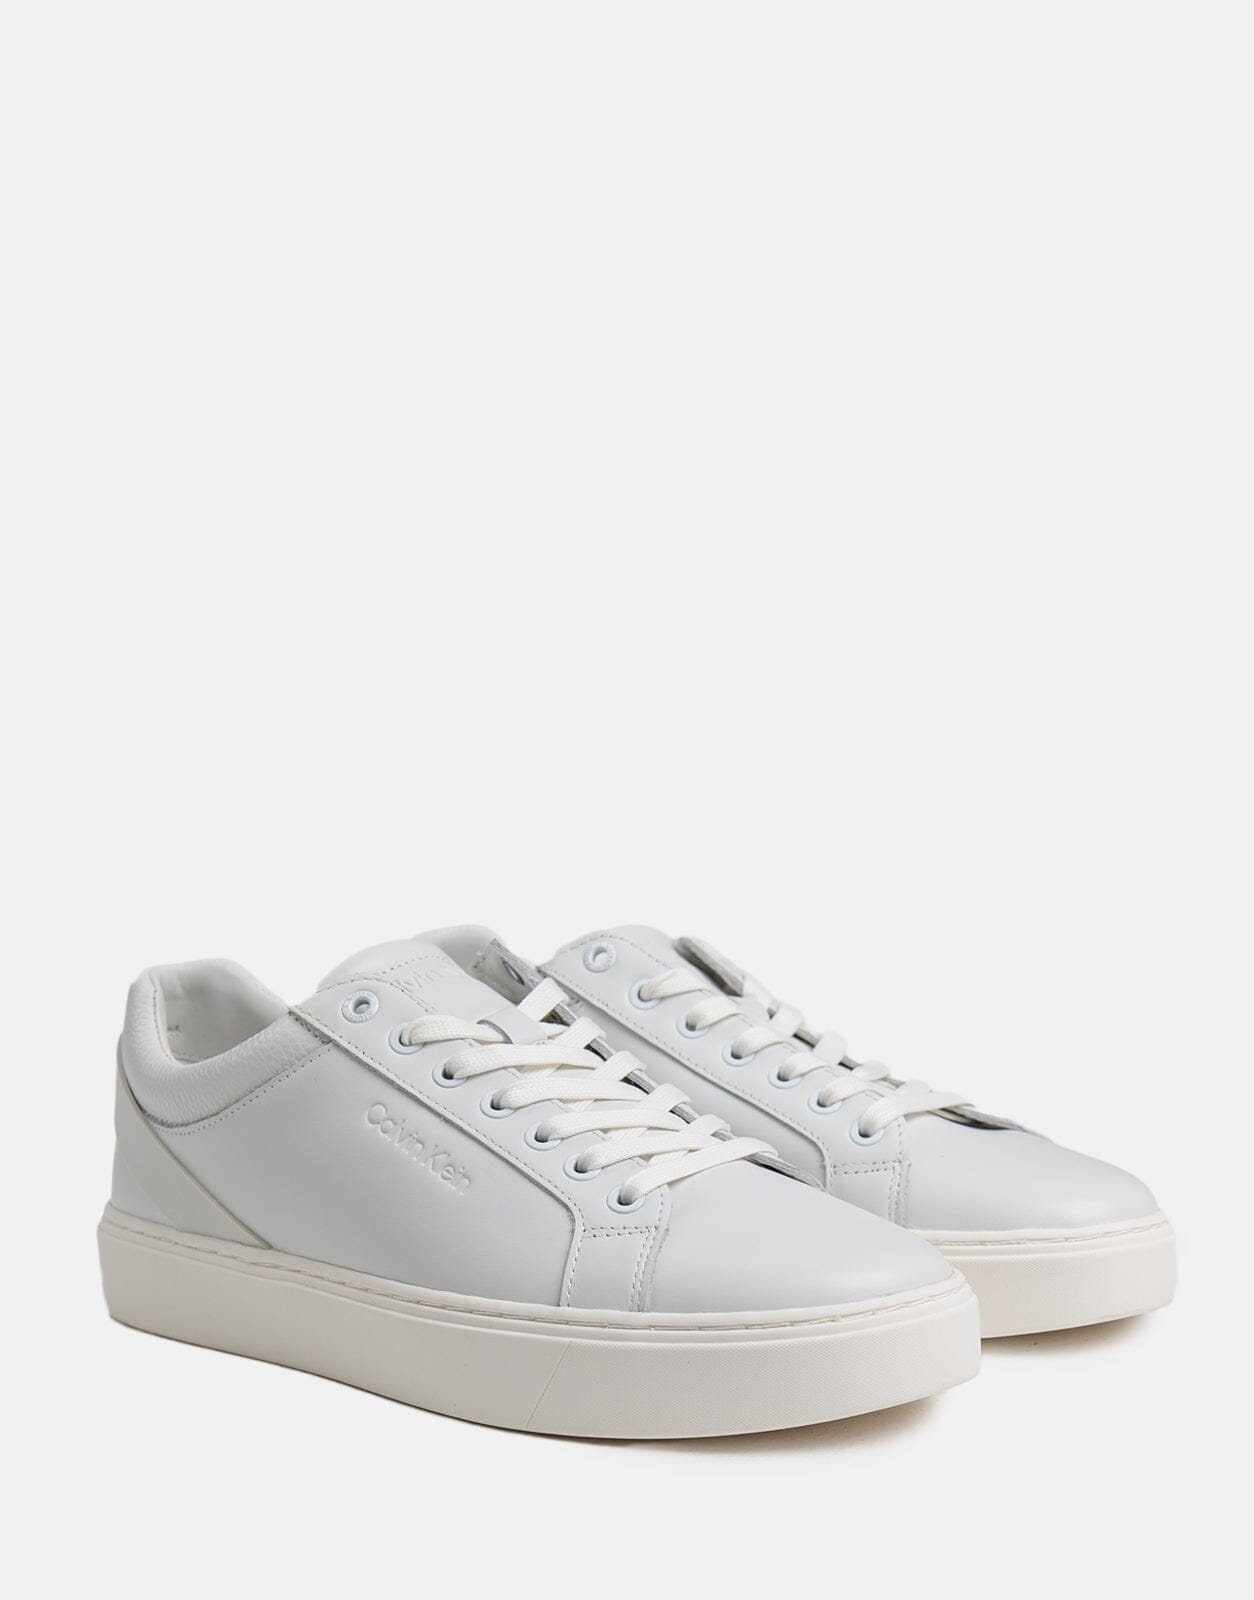 Calvin Klein Archive Stripe Low Top White Sneakers - Subwear